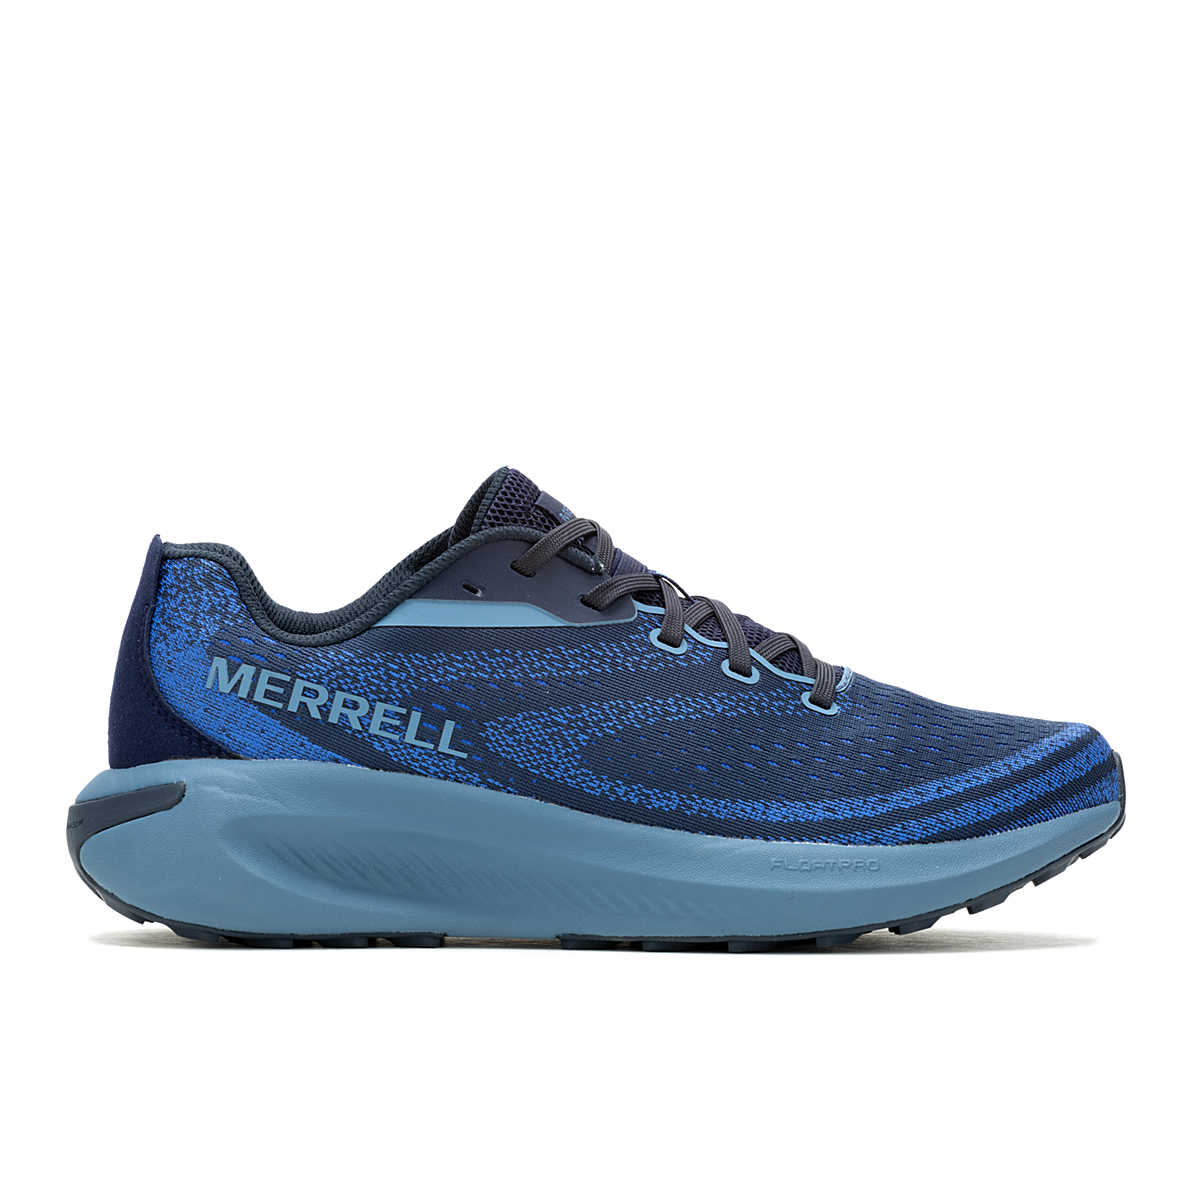 Merrel Men's Morphlite Trail Running Sneakers - Sea/Dazzle